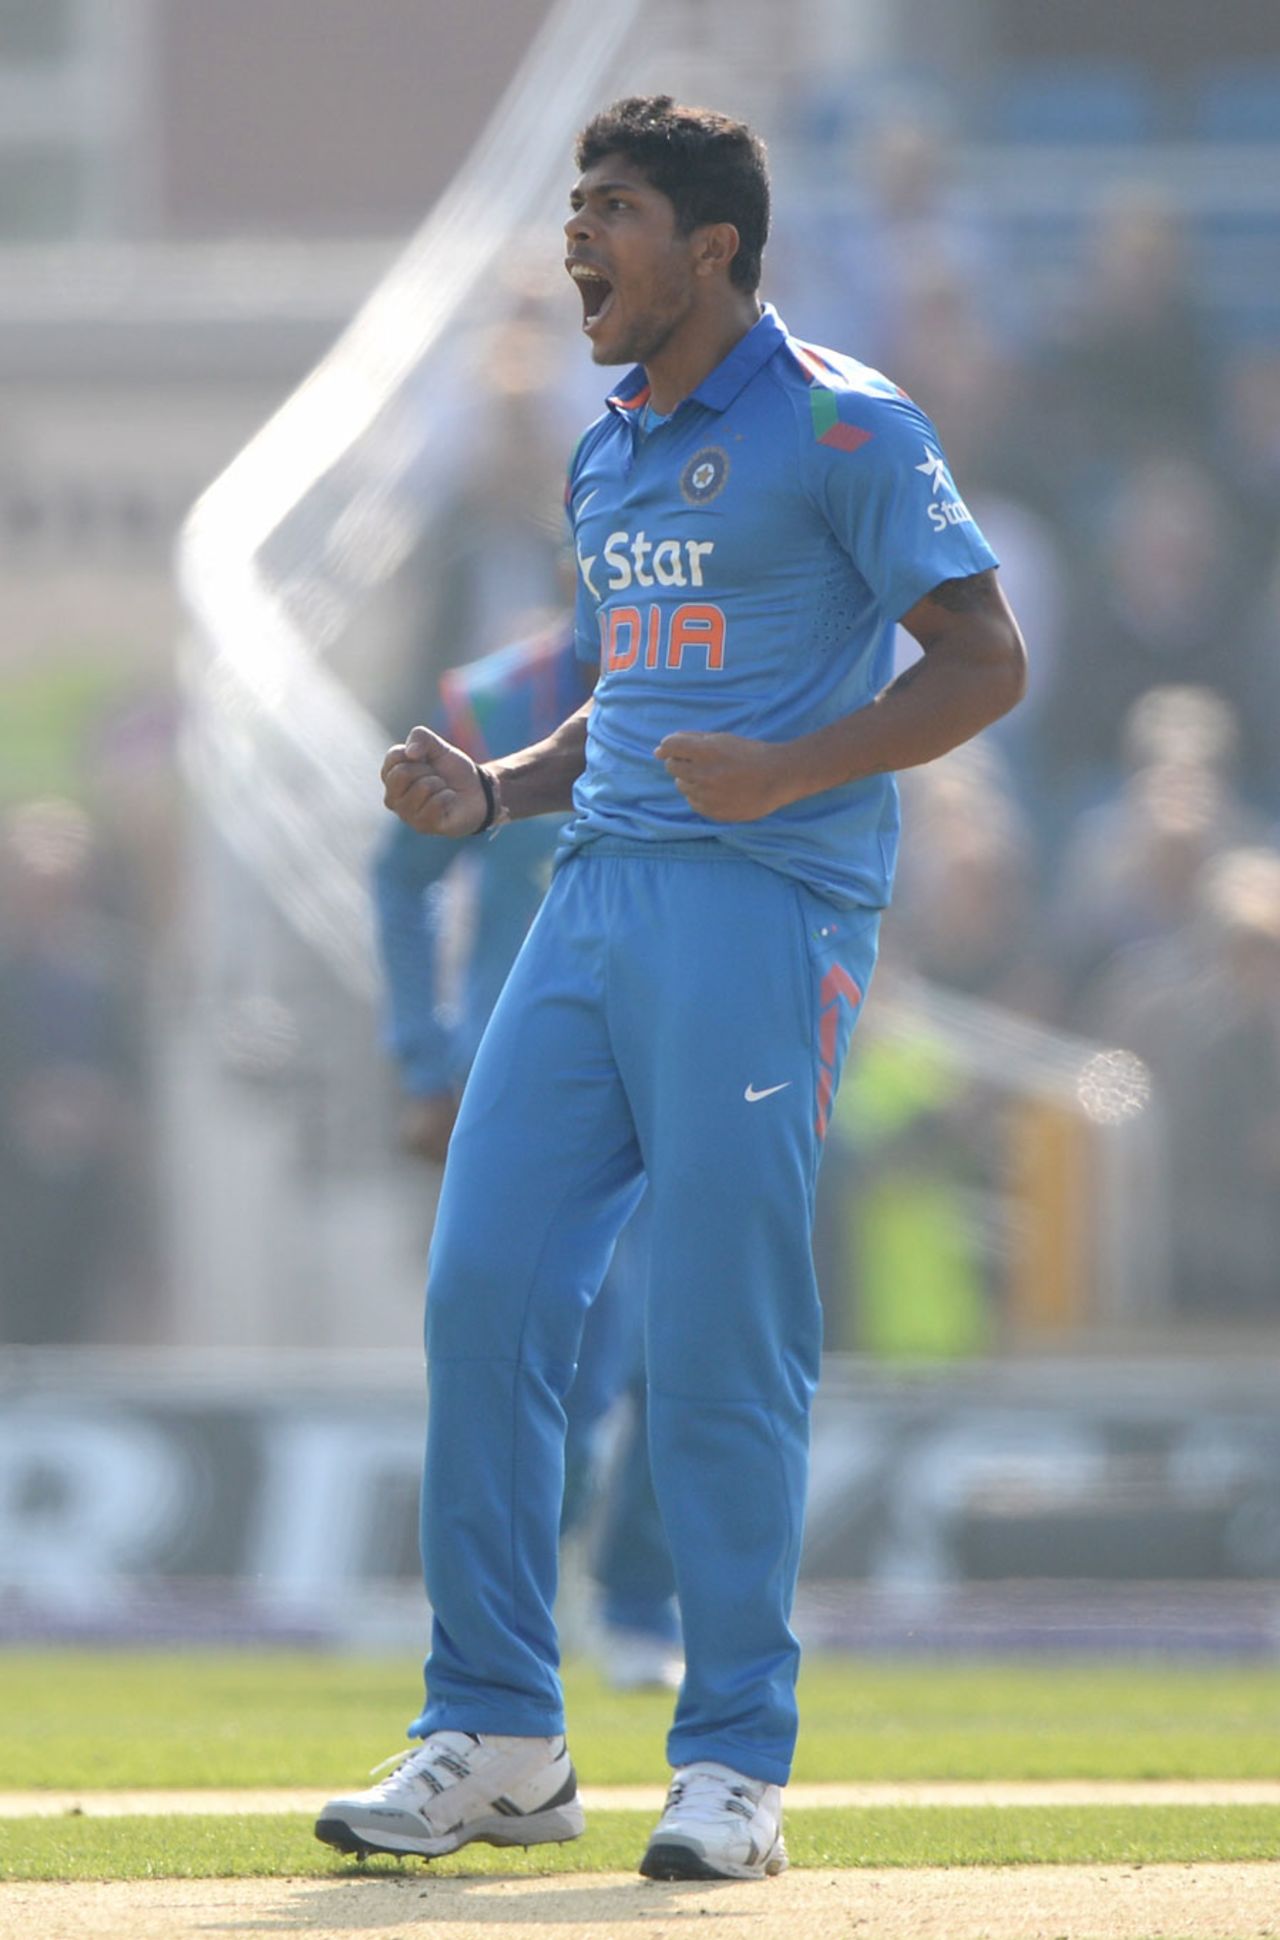 Umesh Yadav picked up the wicket of Alex Hales early on, England v India, 5th ODI, Headingley, September 5, 2014